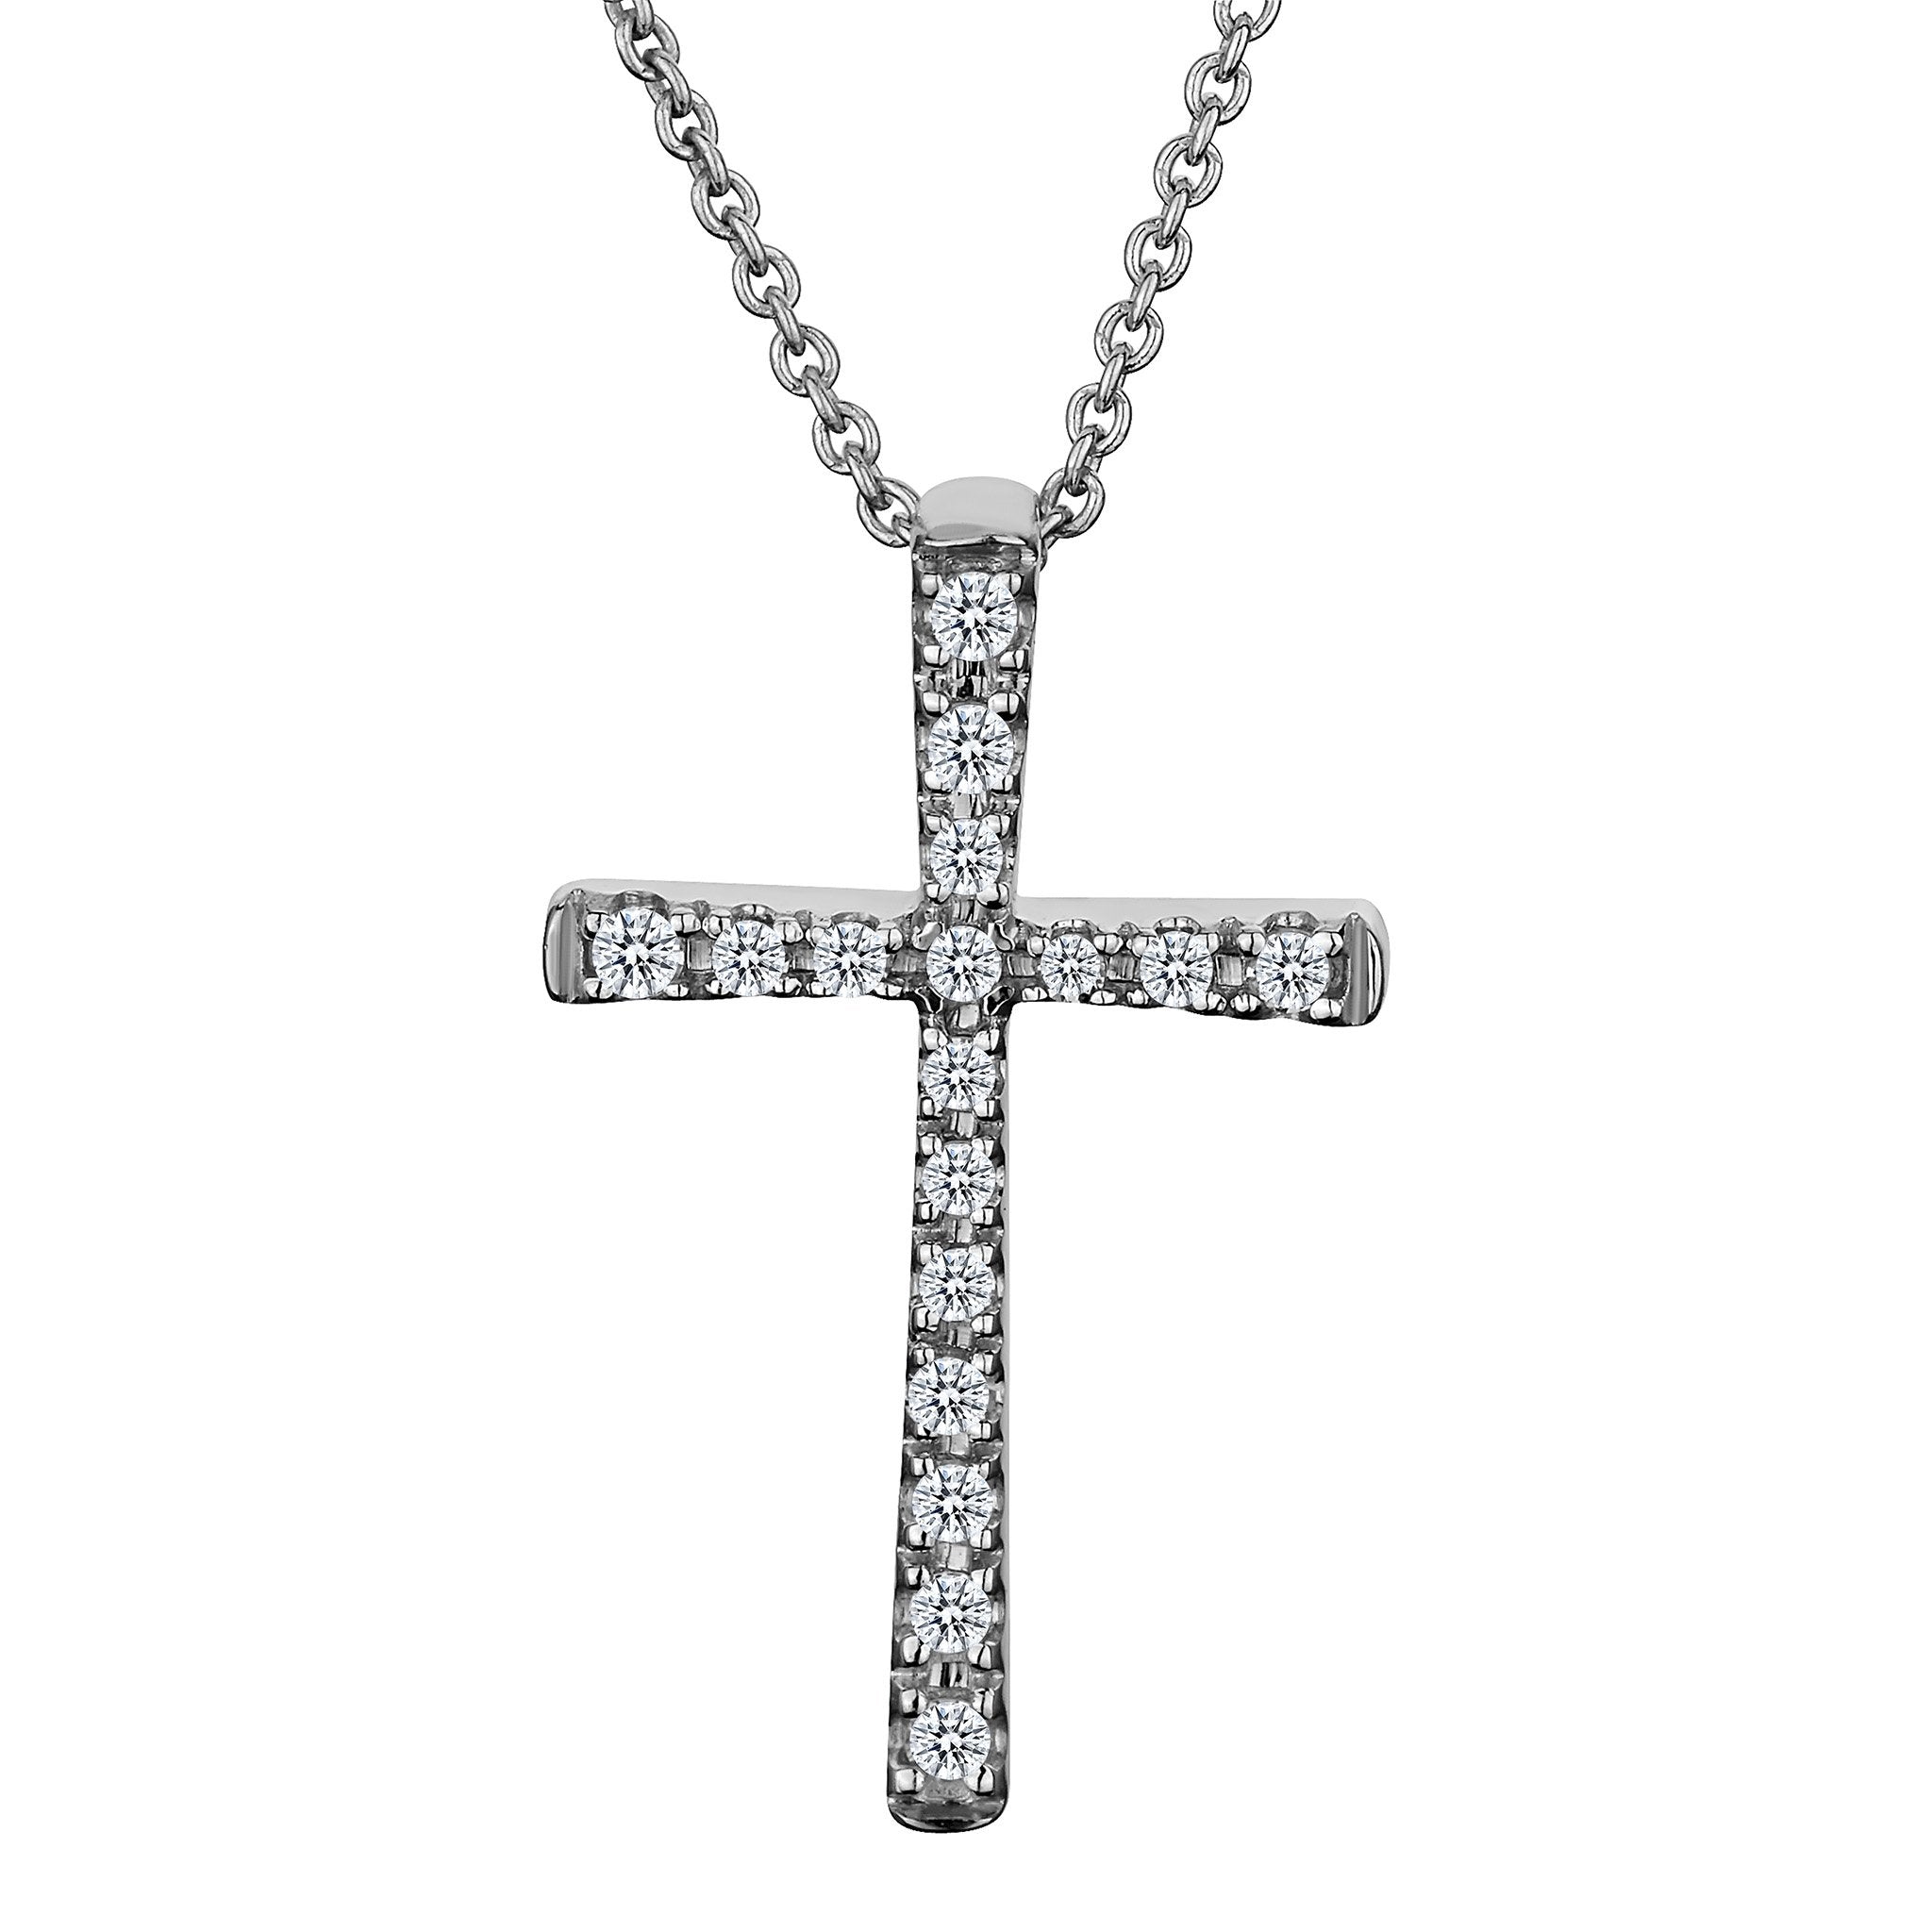 .10 Carat Diamond Cross Pendant,  10kt White Gold. Necklaces and Pendants. Griffin Jewellery Designs.